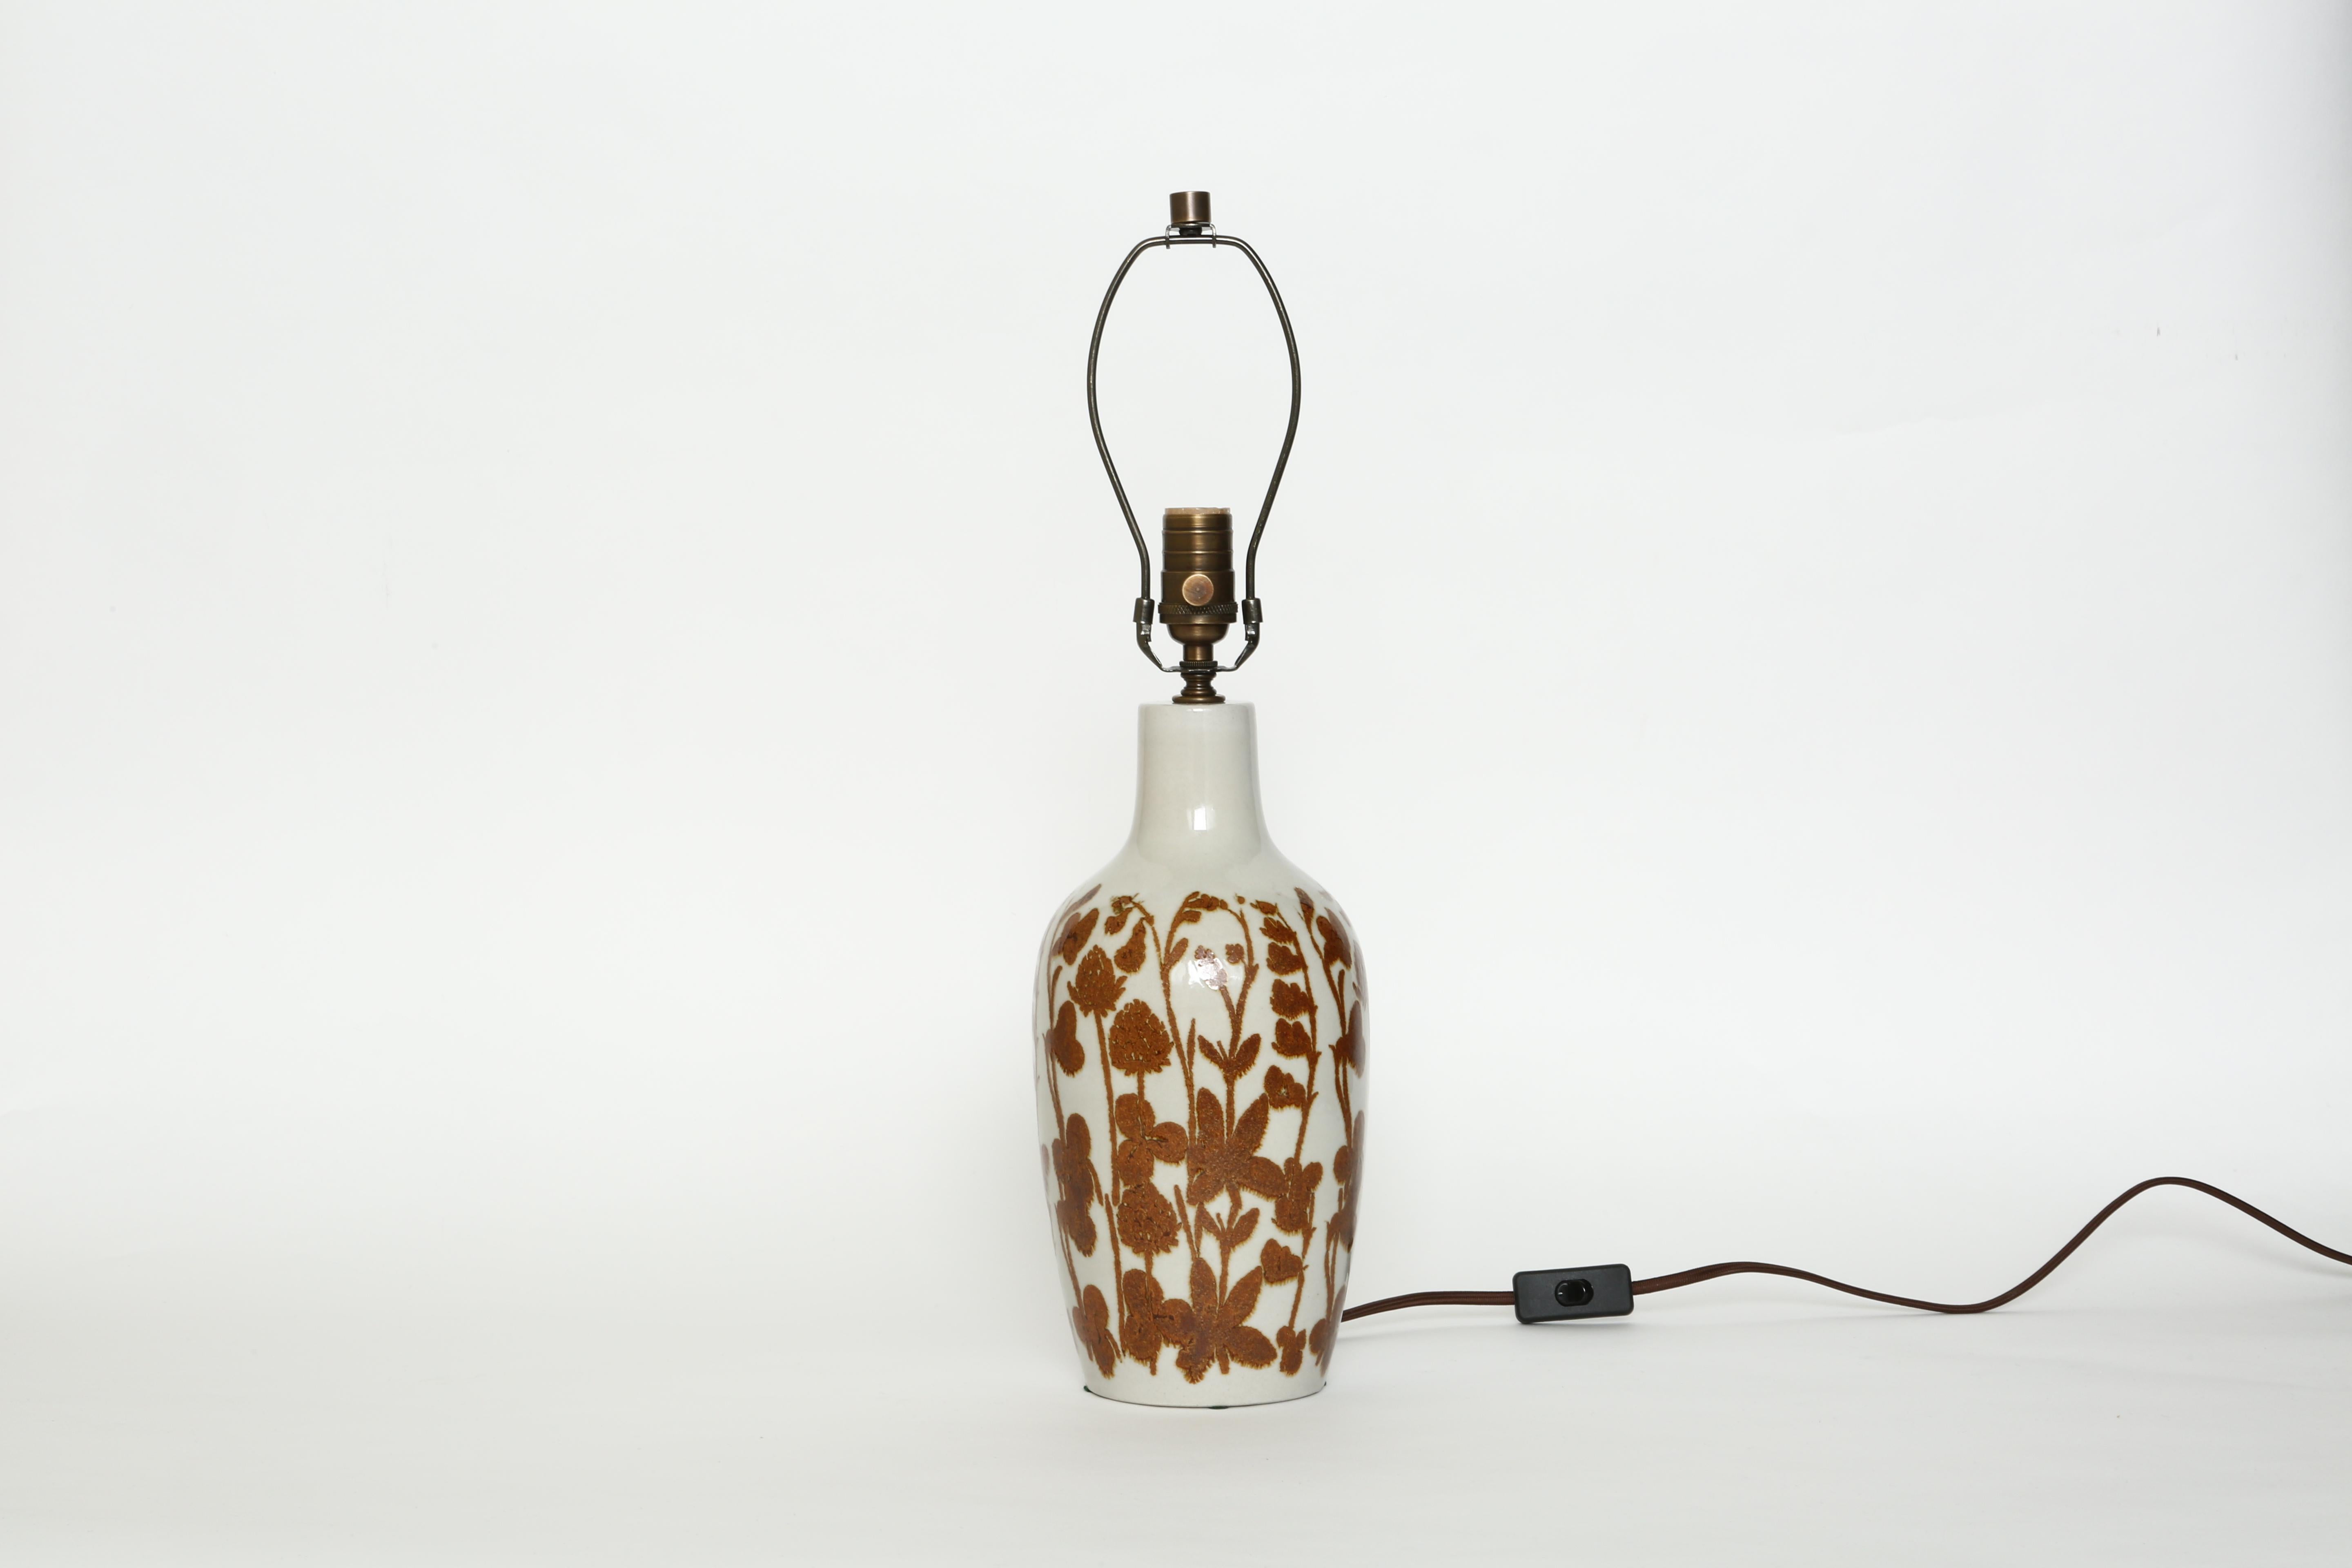 Carl-Harry Stalhane for Designhuset table lamp.
Ceramic, patinated brass.
Sweden, 1970s.